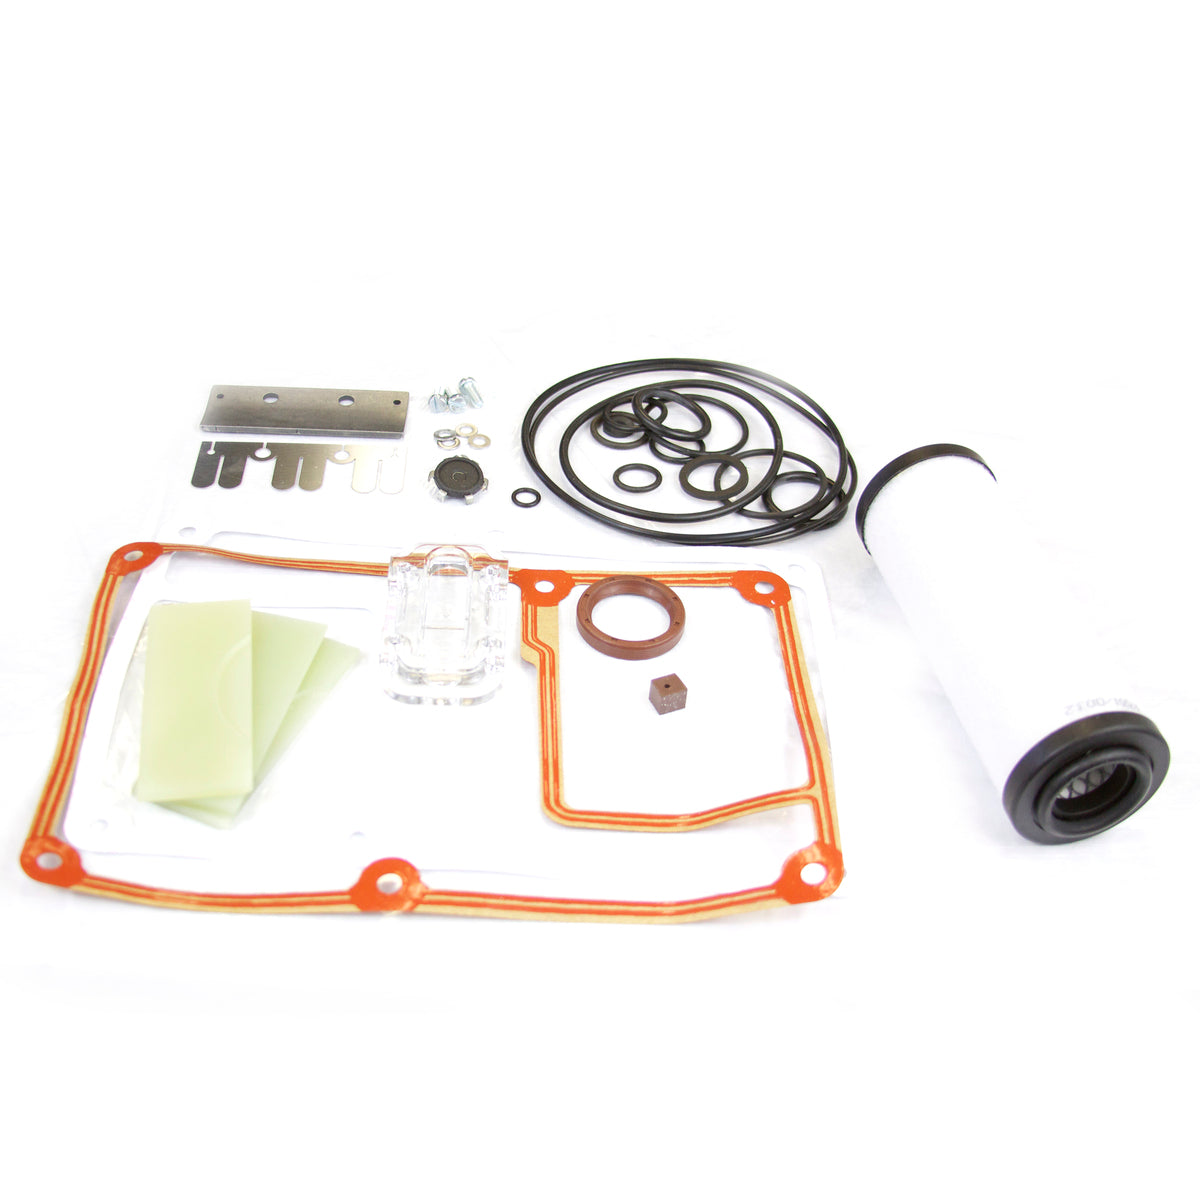 Major Repair Kit with GX Vanes - Leybold SV 200, PL71436190